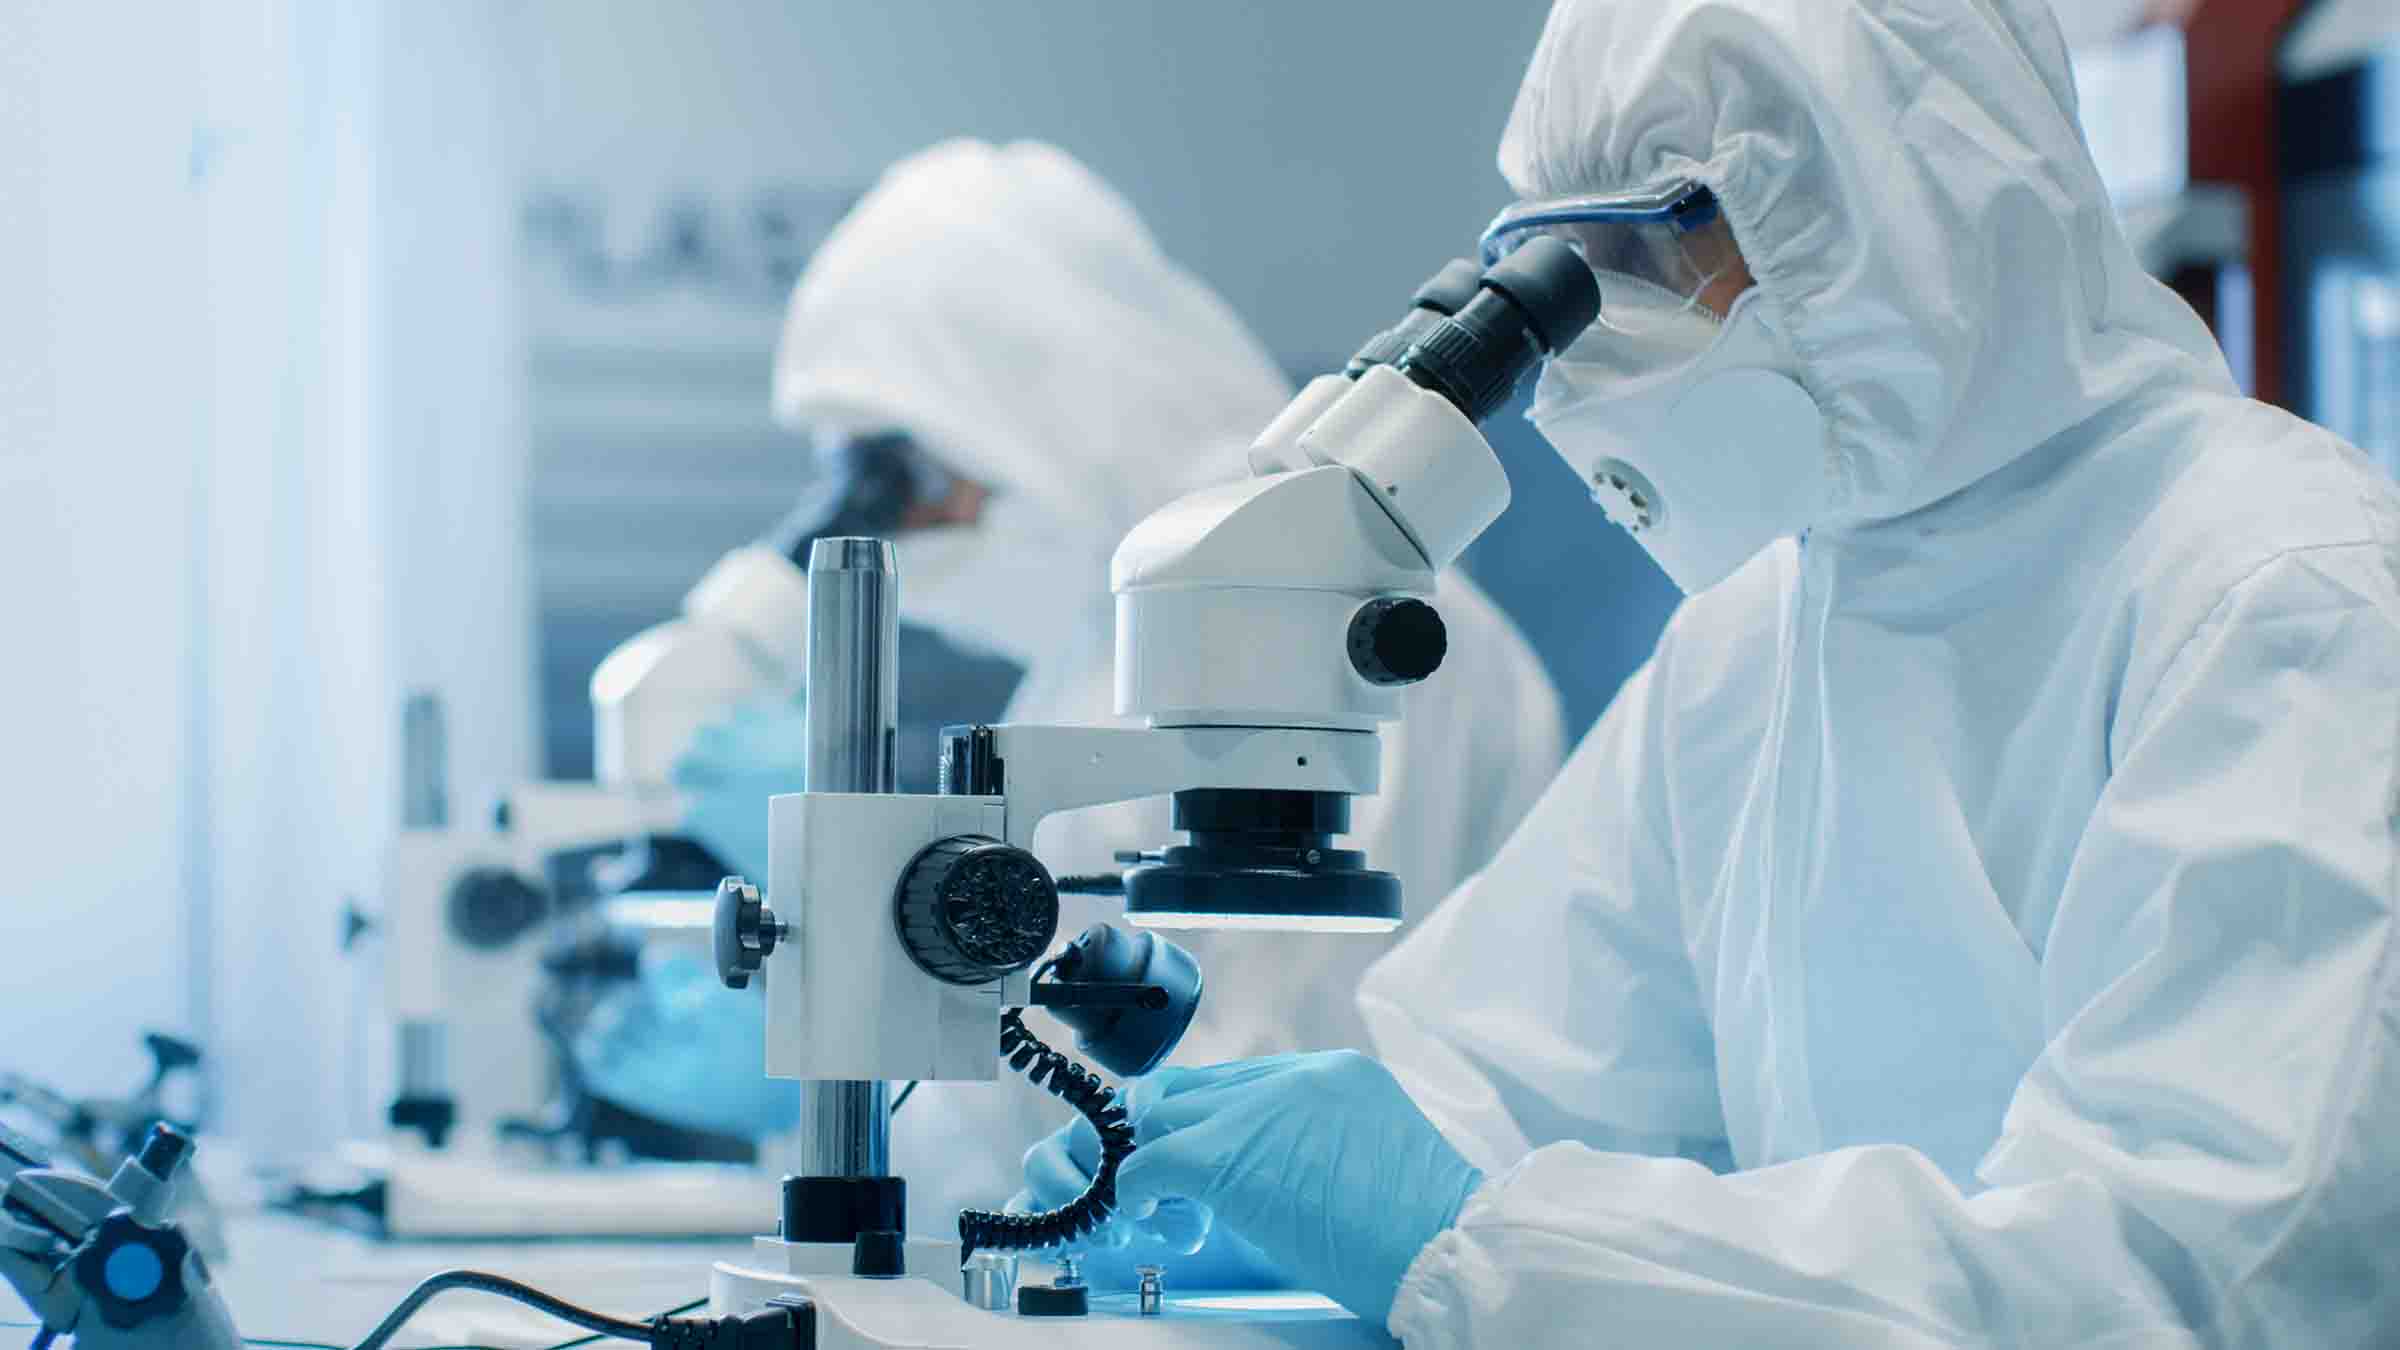 Bio-technology startup StemoniX agrees to merger with public pharma company